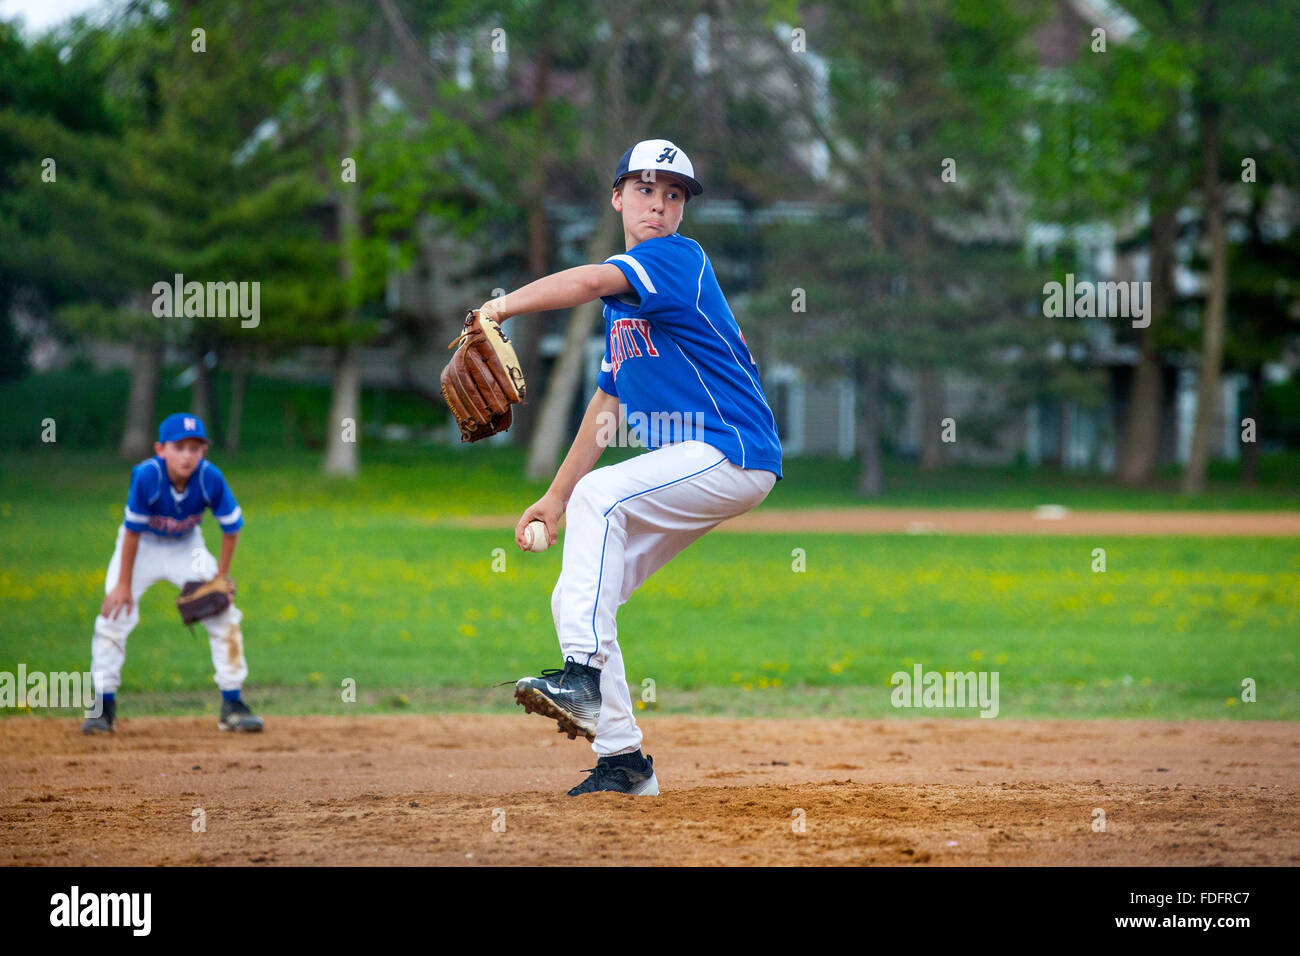 Little league baseball pitcher age 12 winding up his pitch on the mound. St Paul Minnesota MN USA Stock Photo